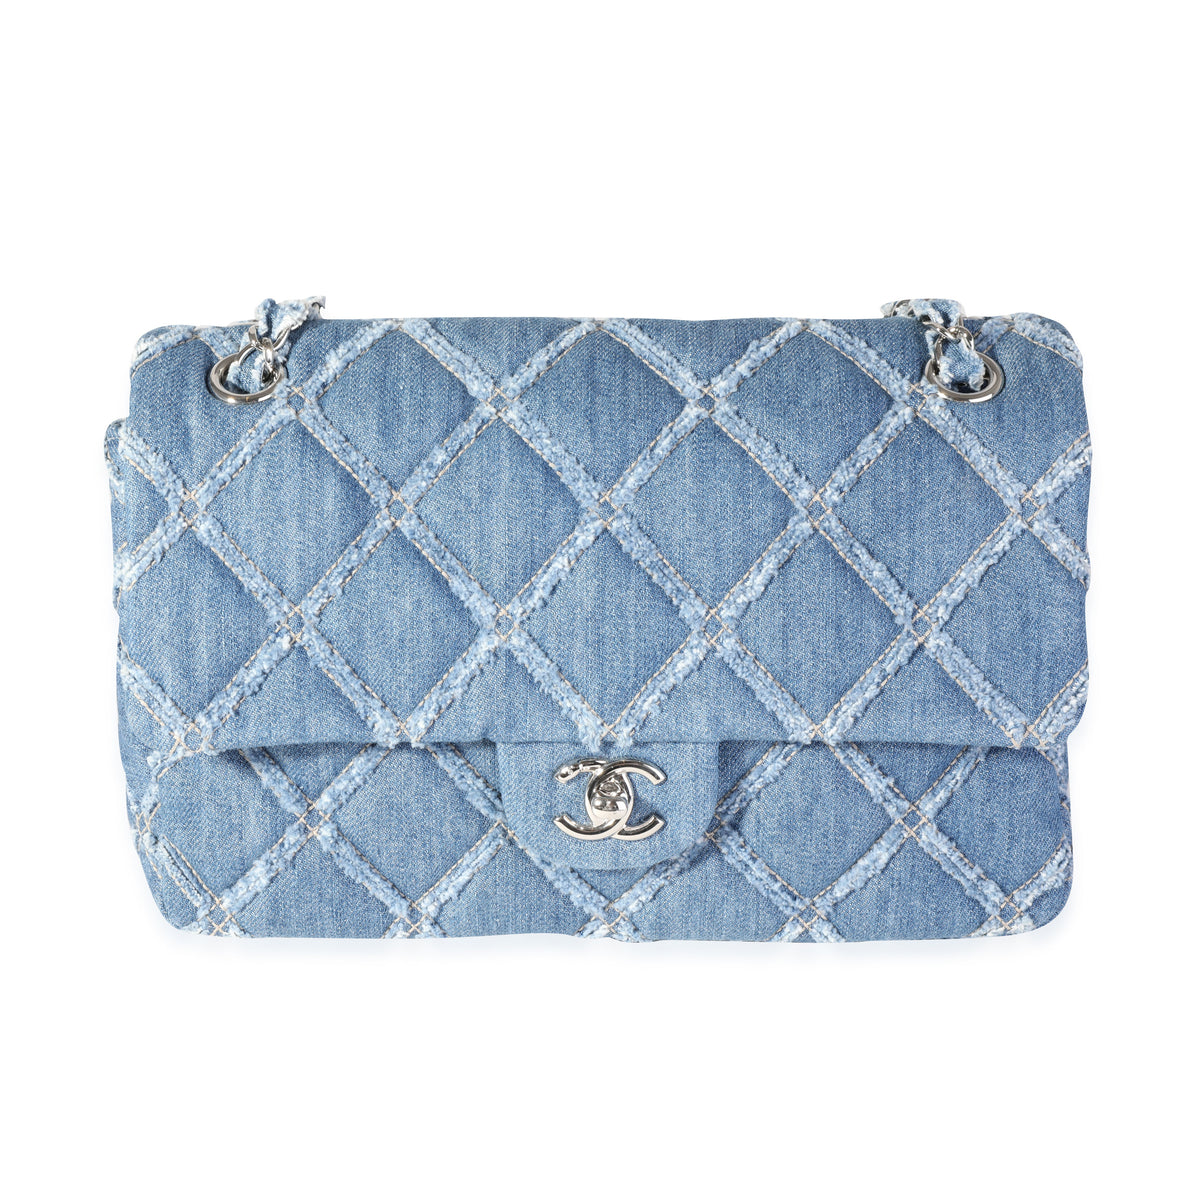 Chanel Blue Quilted Denim Medium Single Flap Bag